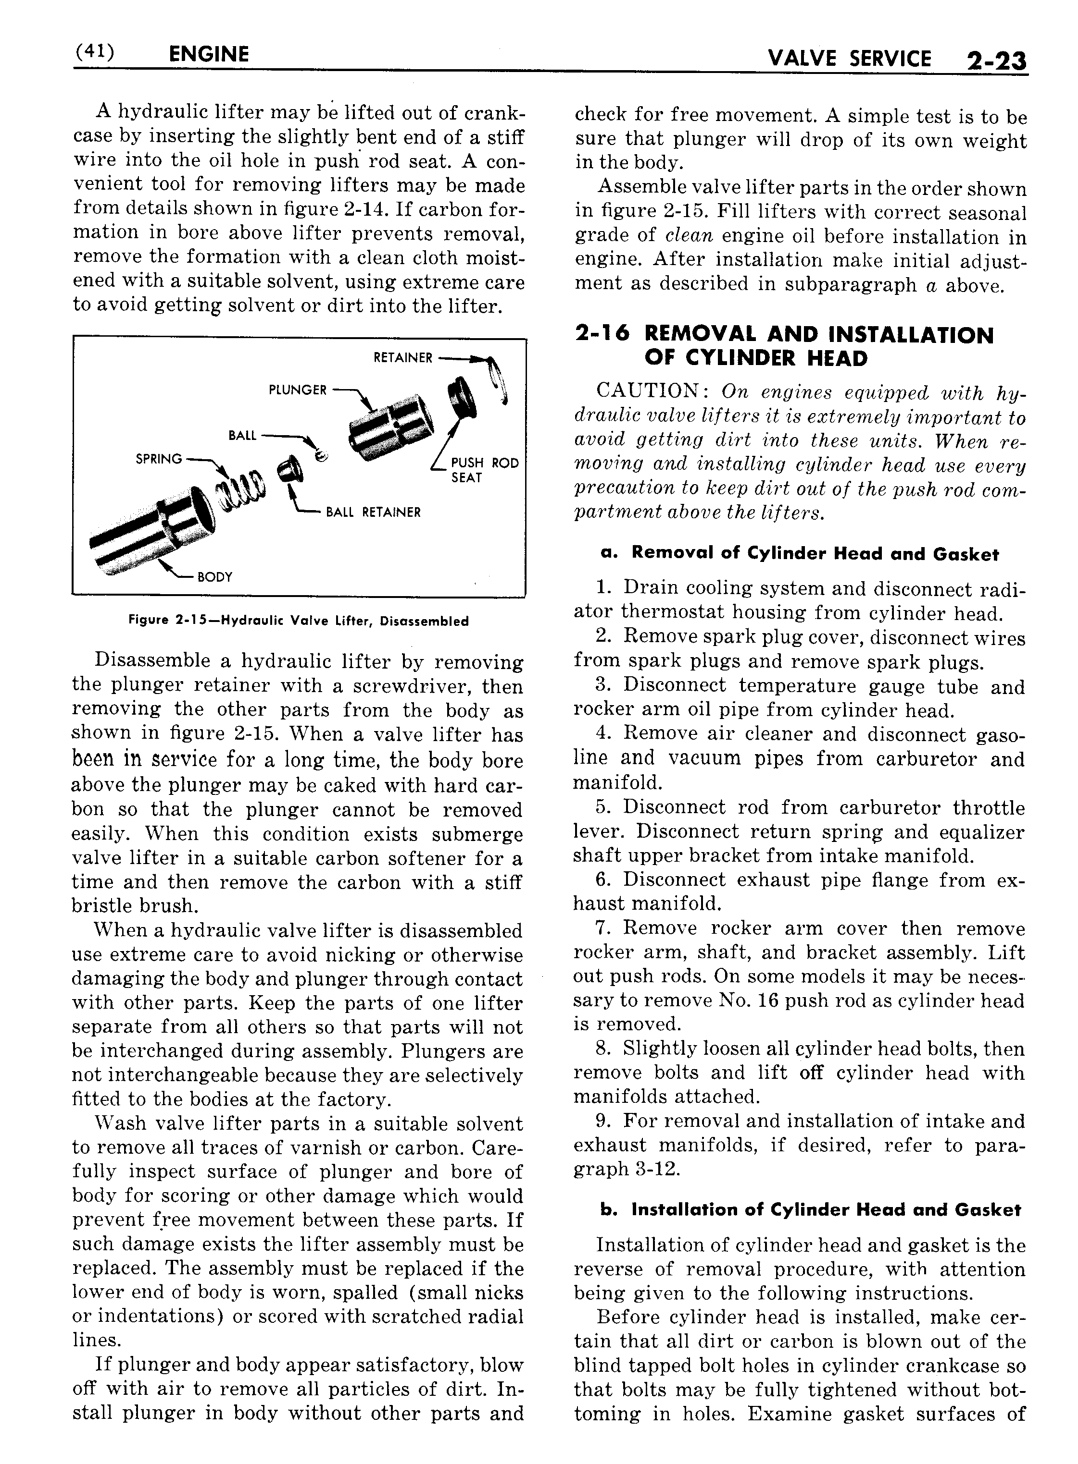 n_03 1951 Buick Shop Manual - Engine-023-023.jpg